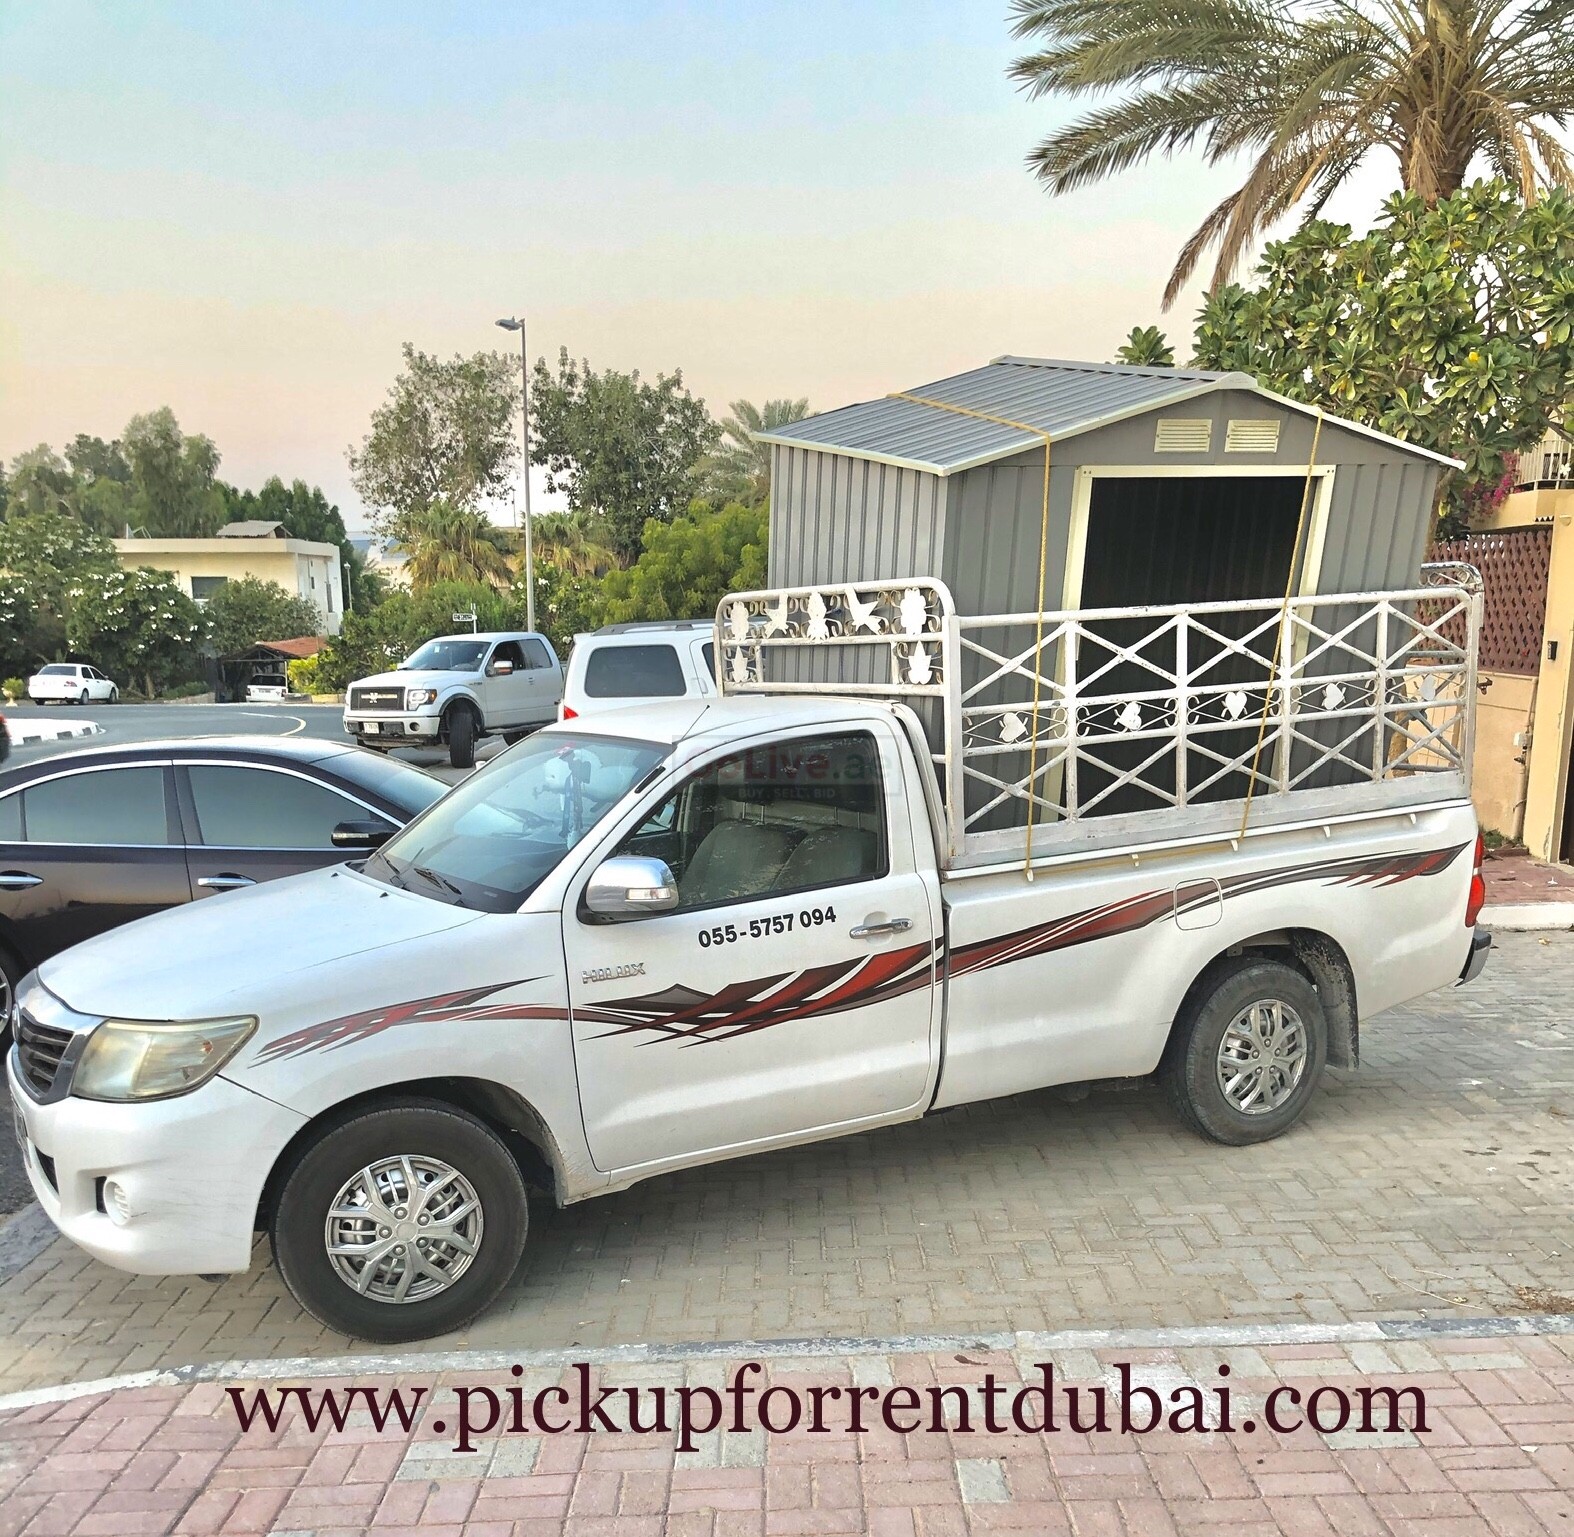 Pickup For Rent in Dubai 055 5757094